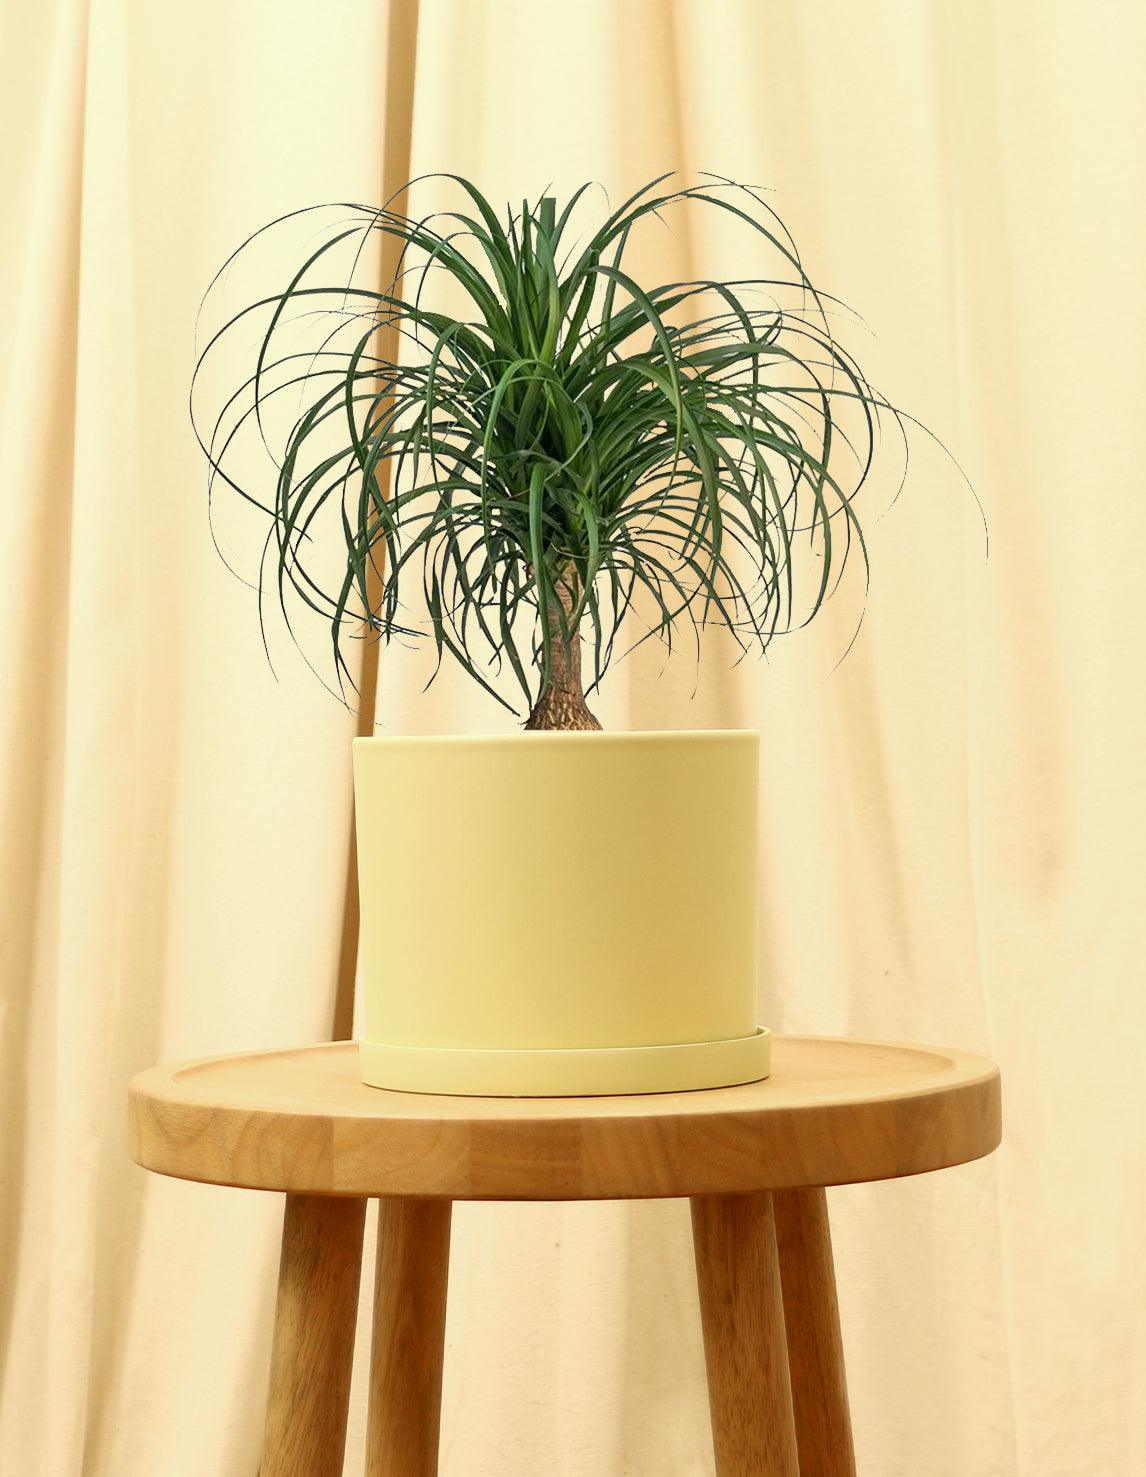 Medium Ponytail Palm Plant in yellow pot.